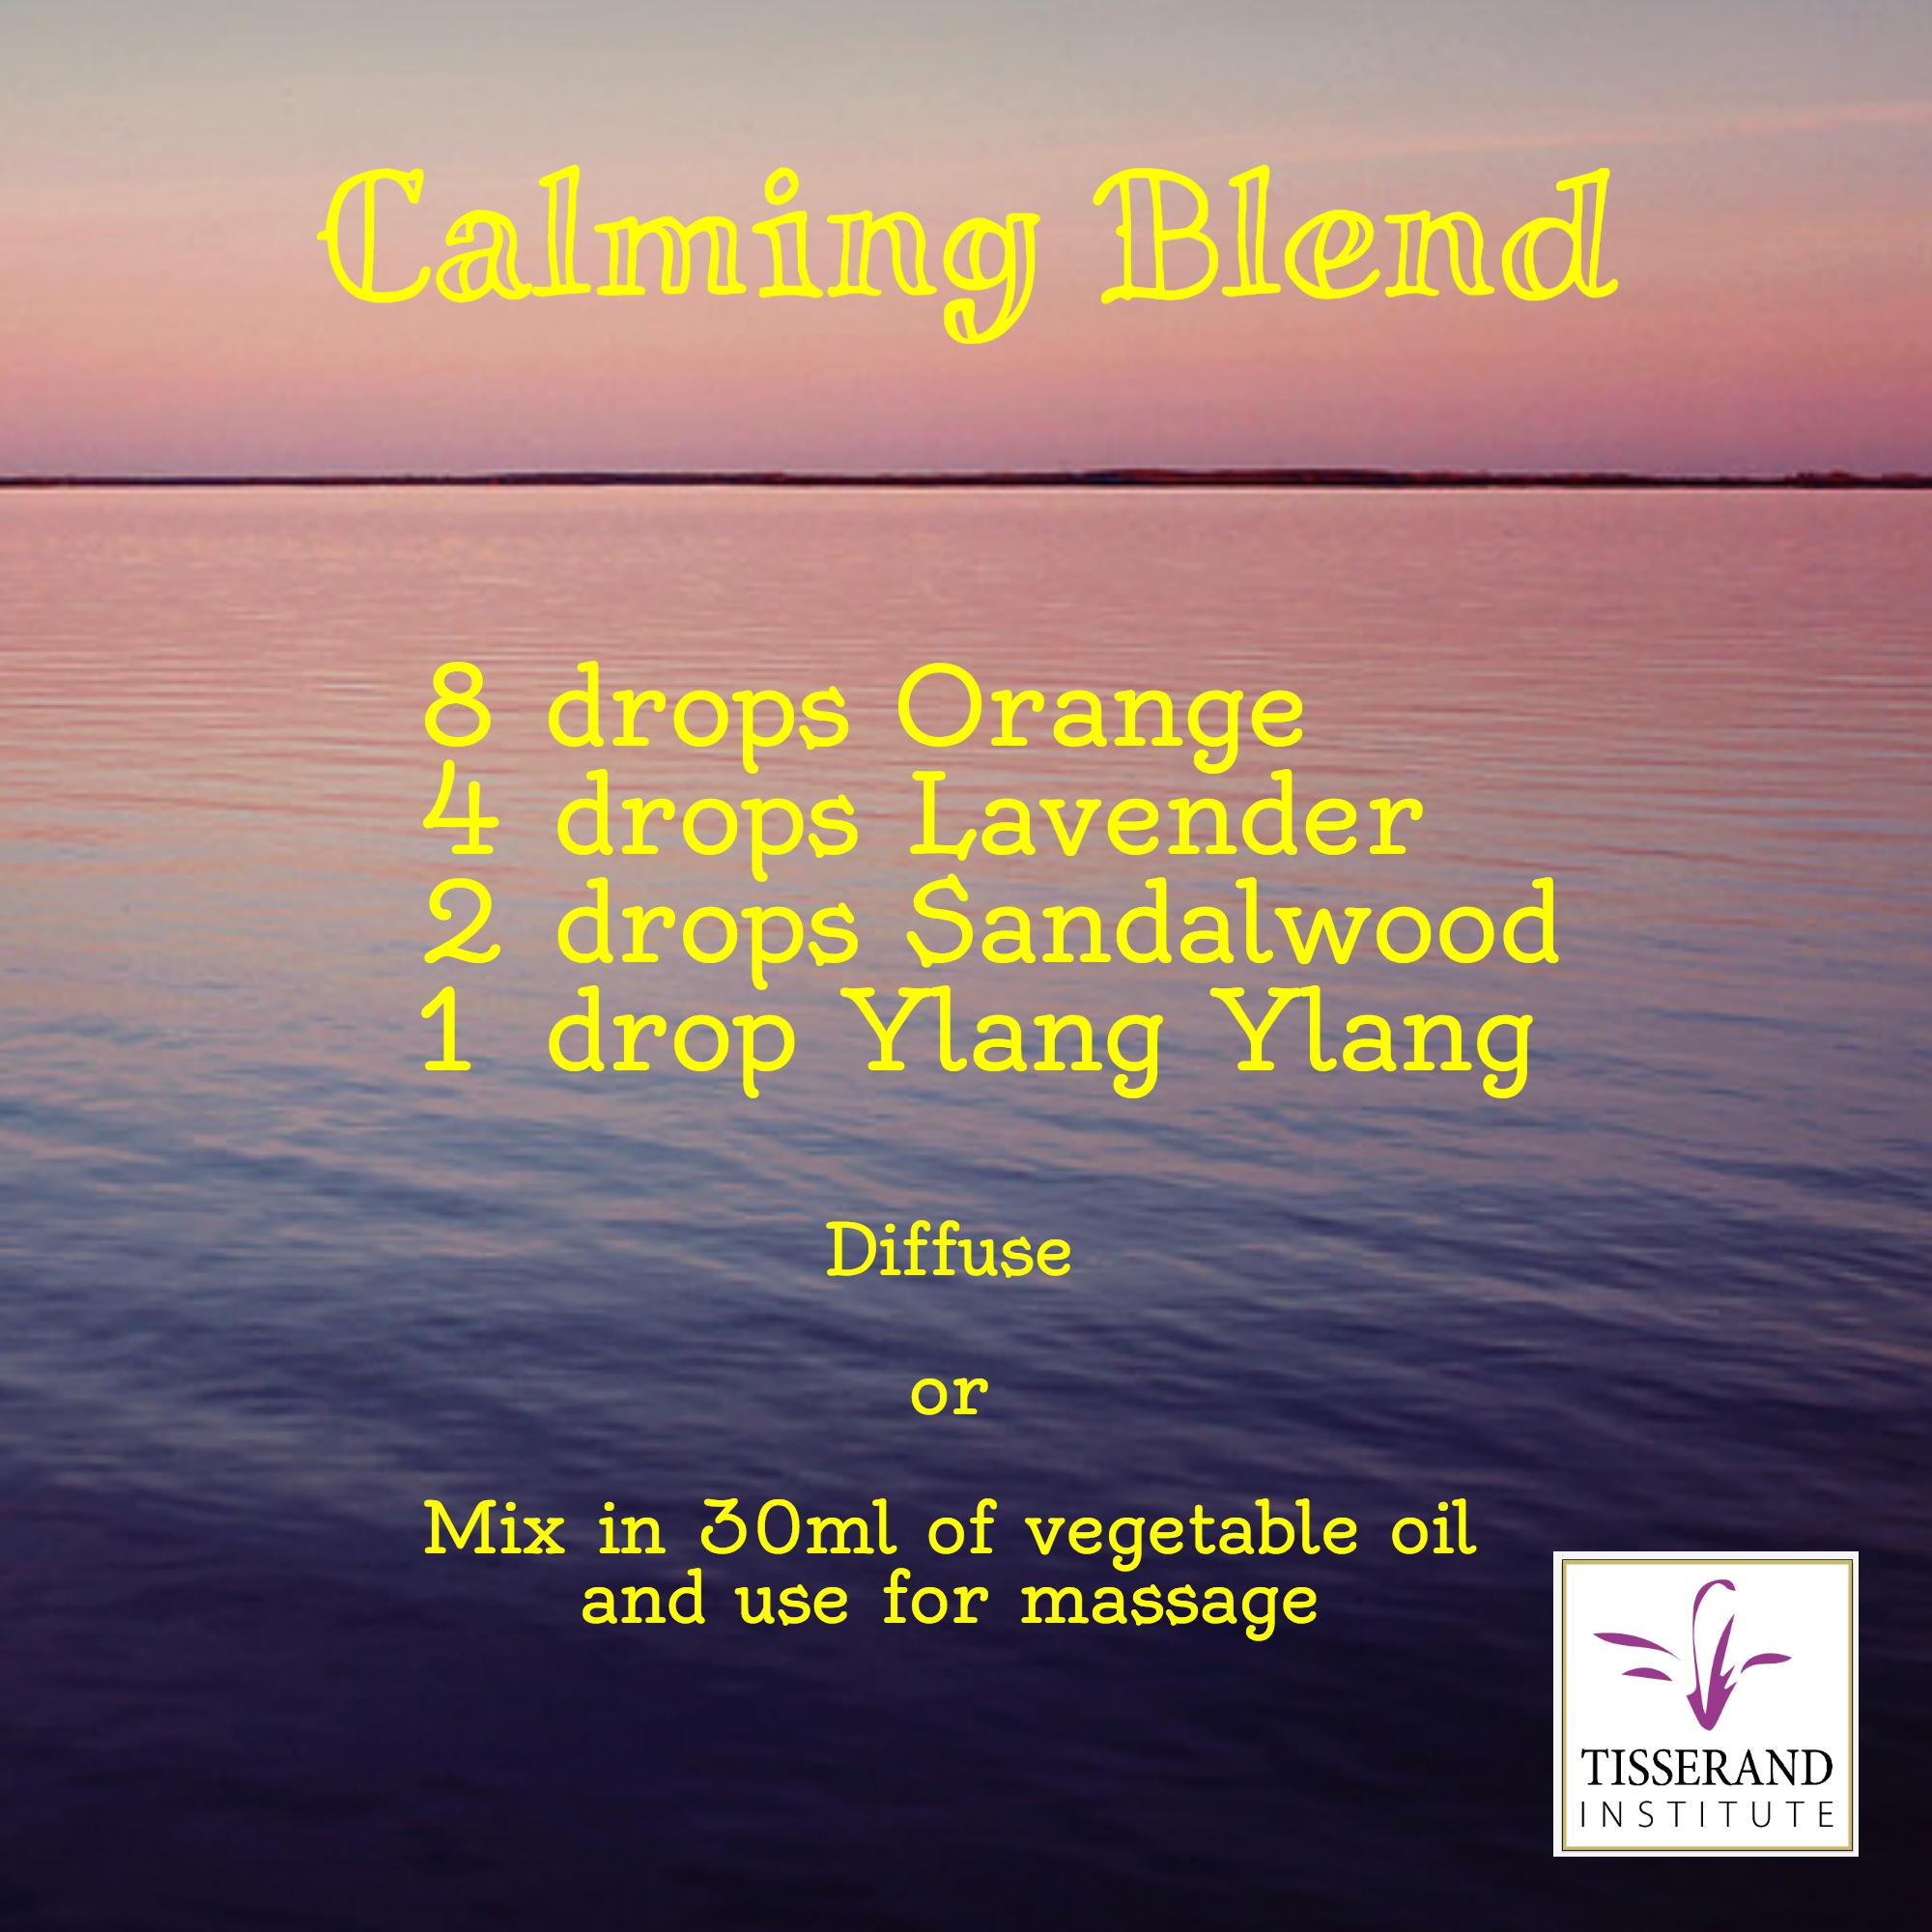 Calming Blend | An Essential Oil Recipe